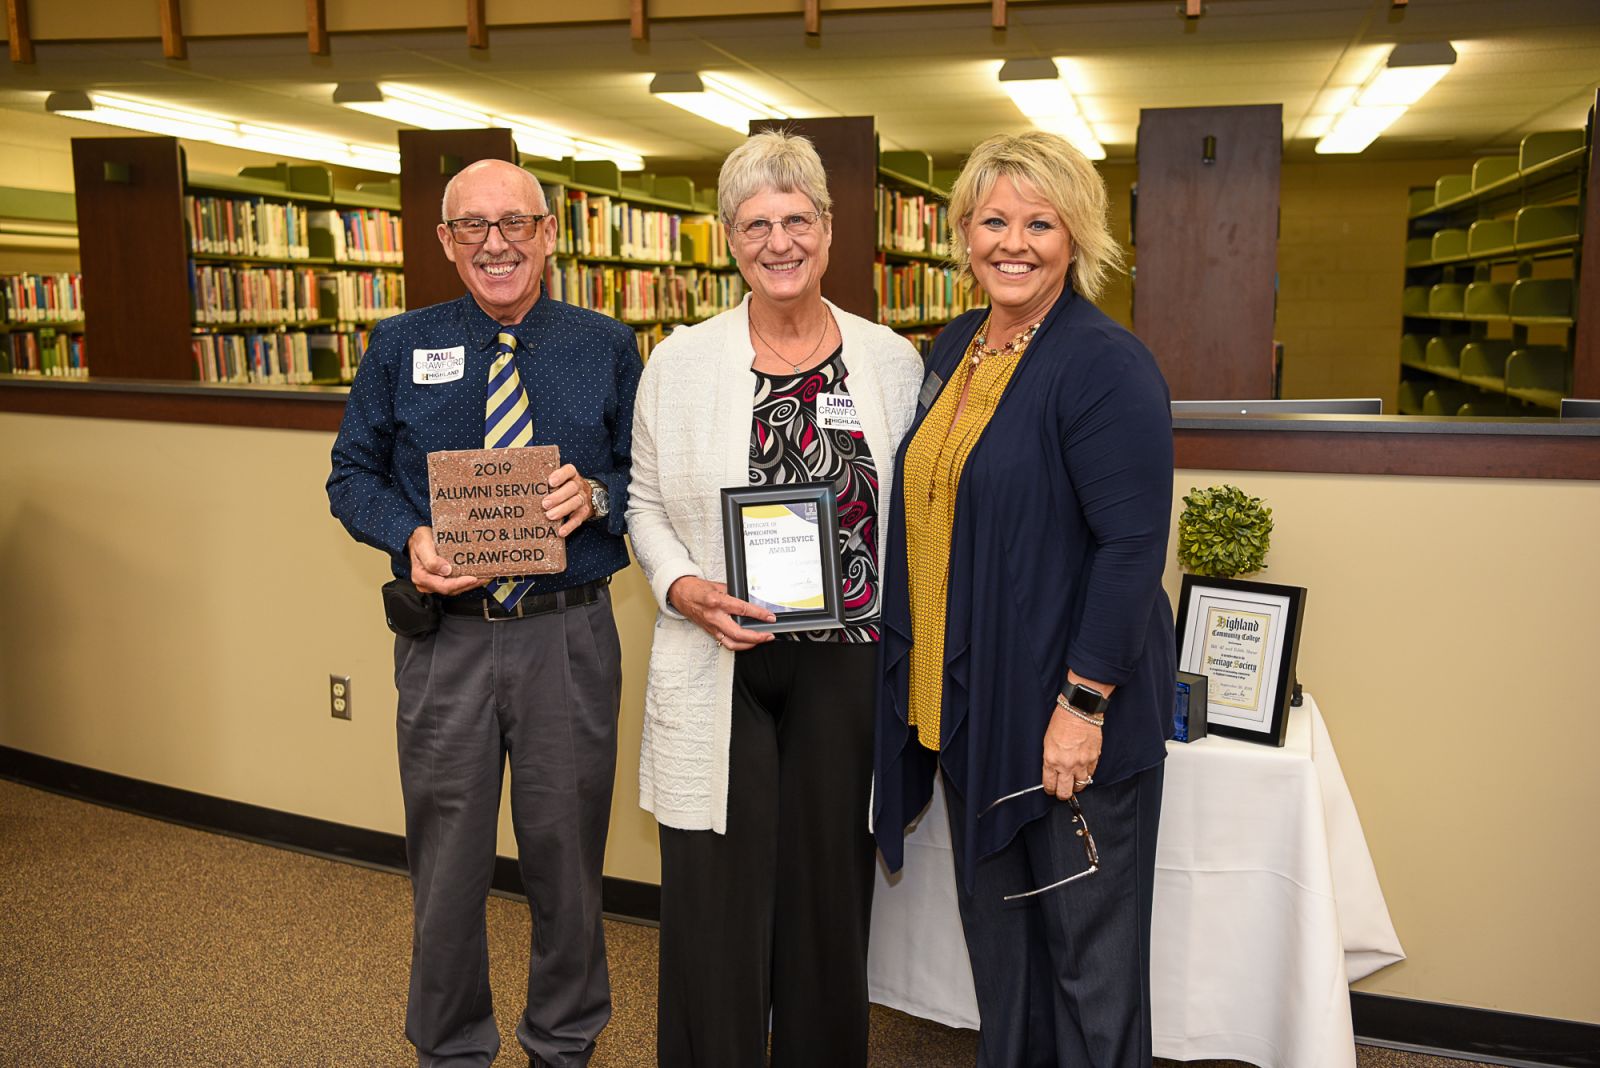 Alumni Service Award Winners: Paul, '70 and Linda Crawford